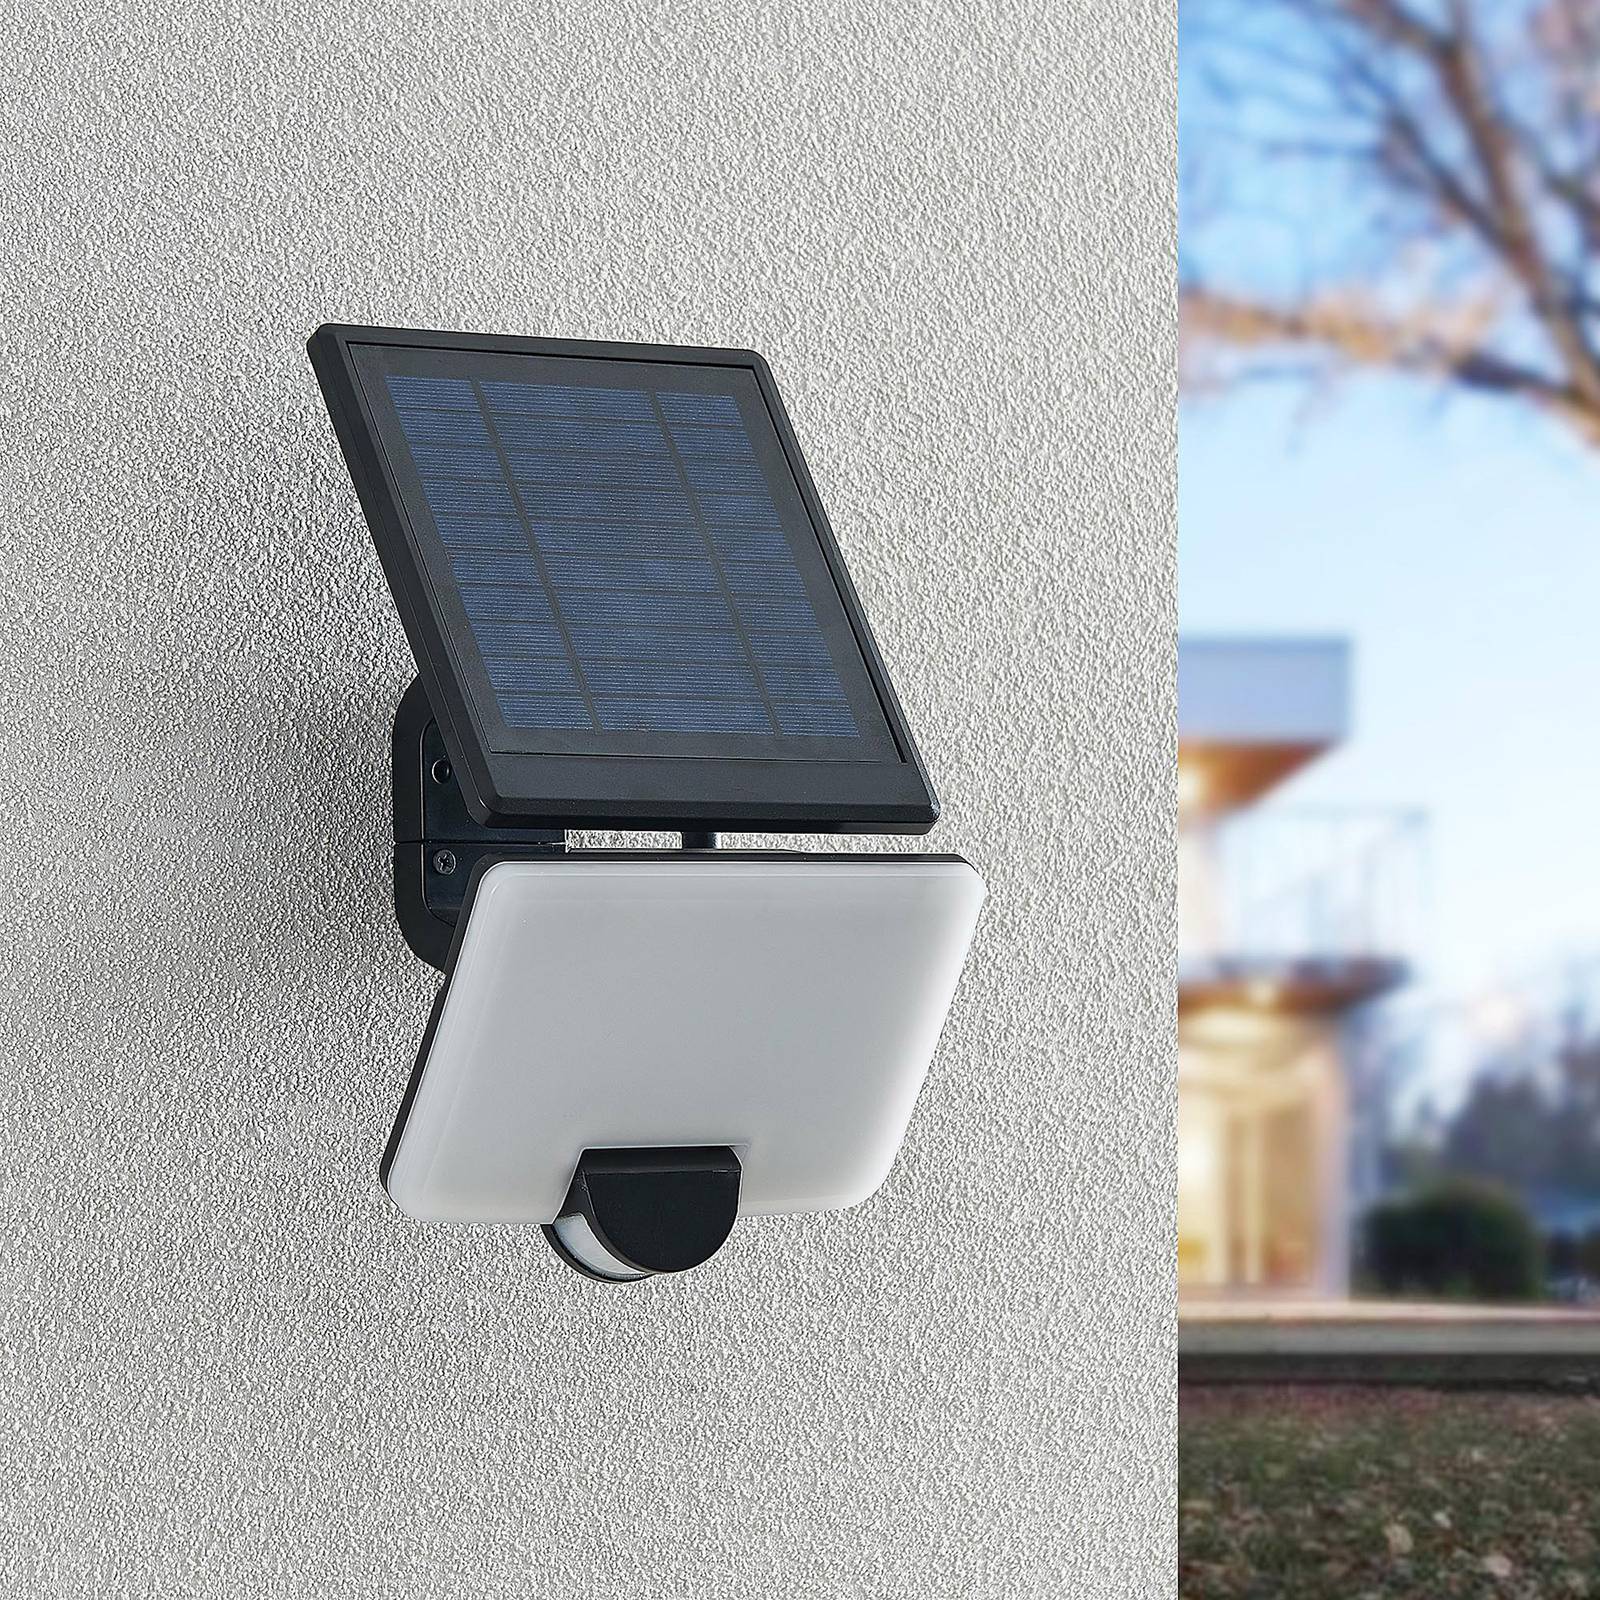 Prios Yahir LED-Solar-Wandstrahler Sensor schwarz günstig online kaufen